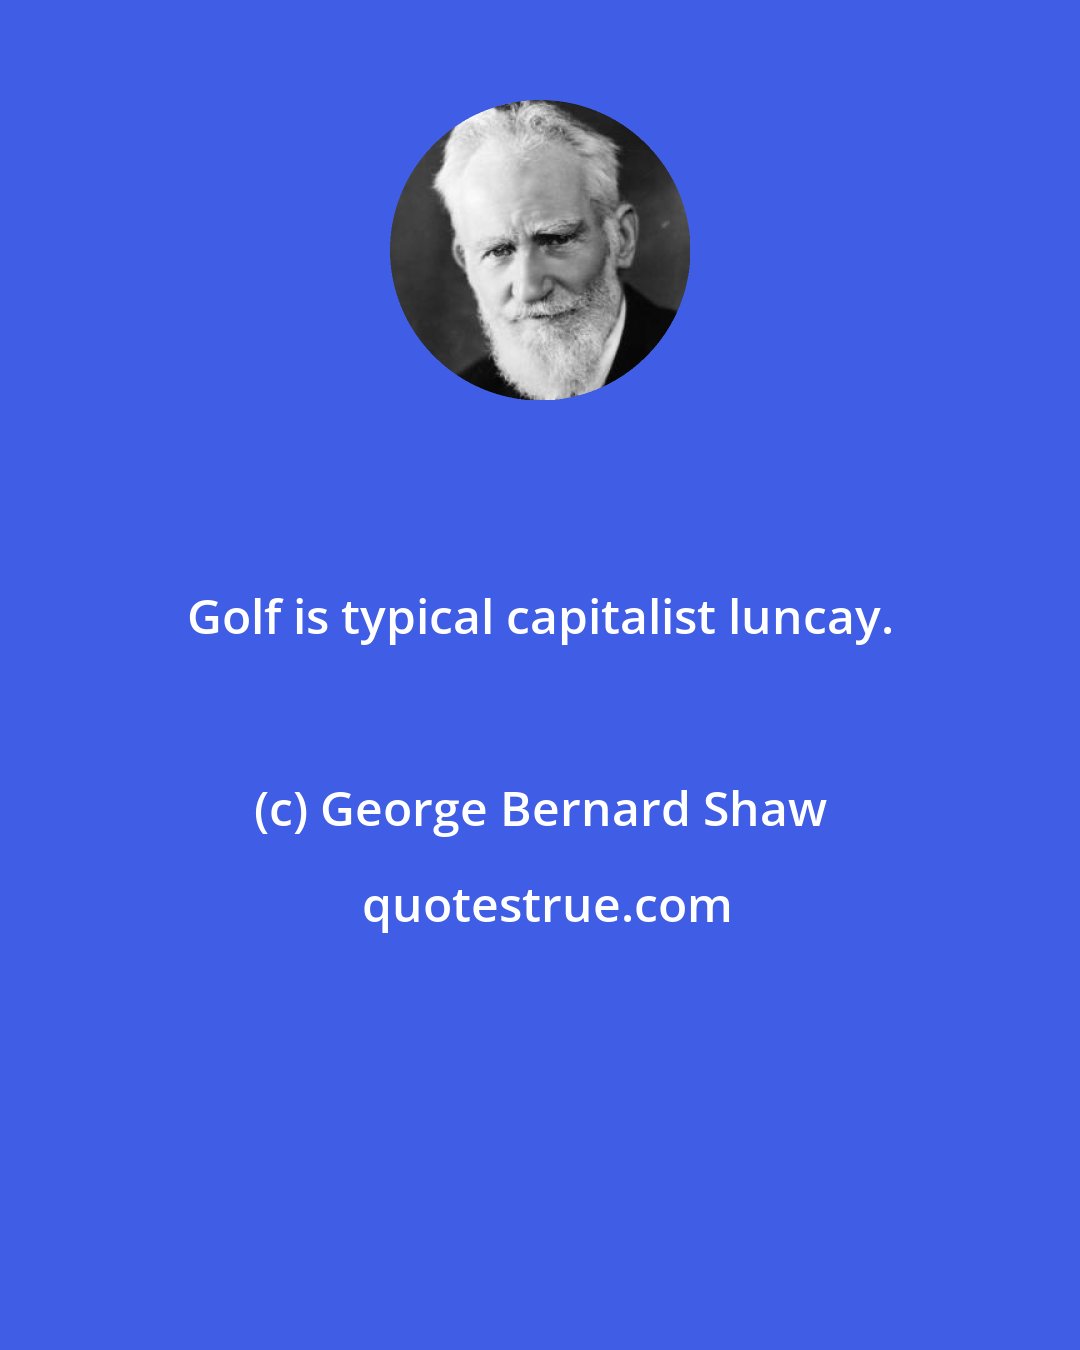 George Bernard Shaw: Golf is typical capitalist luncay.